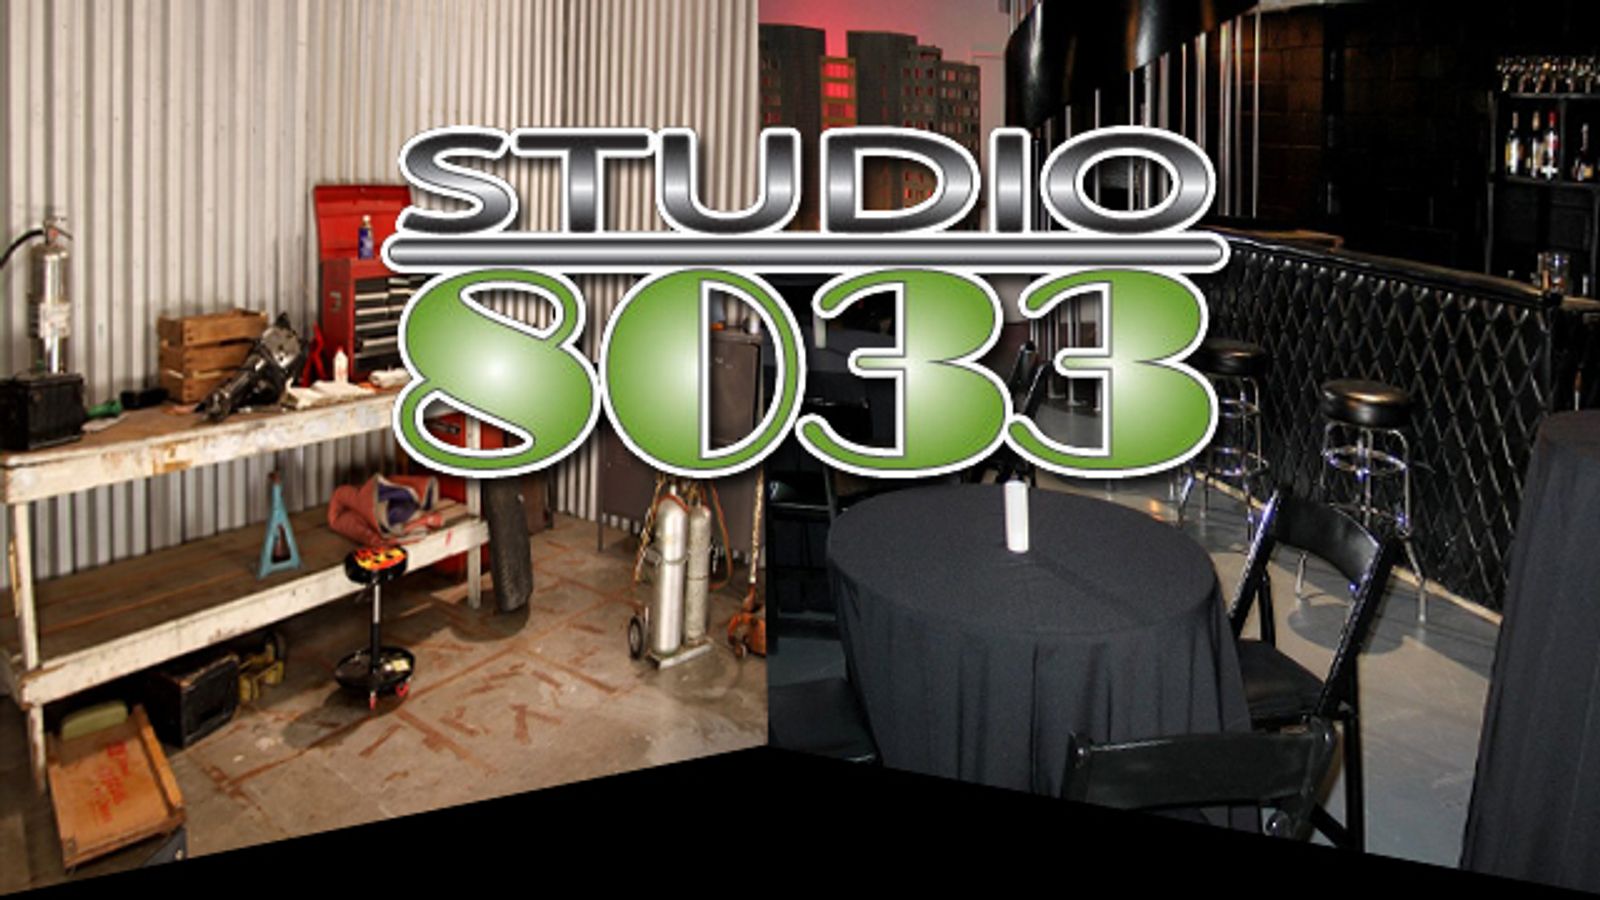 Studio 8033 Expands